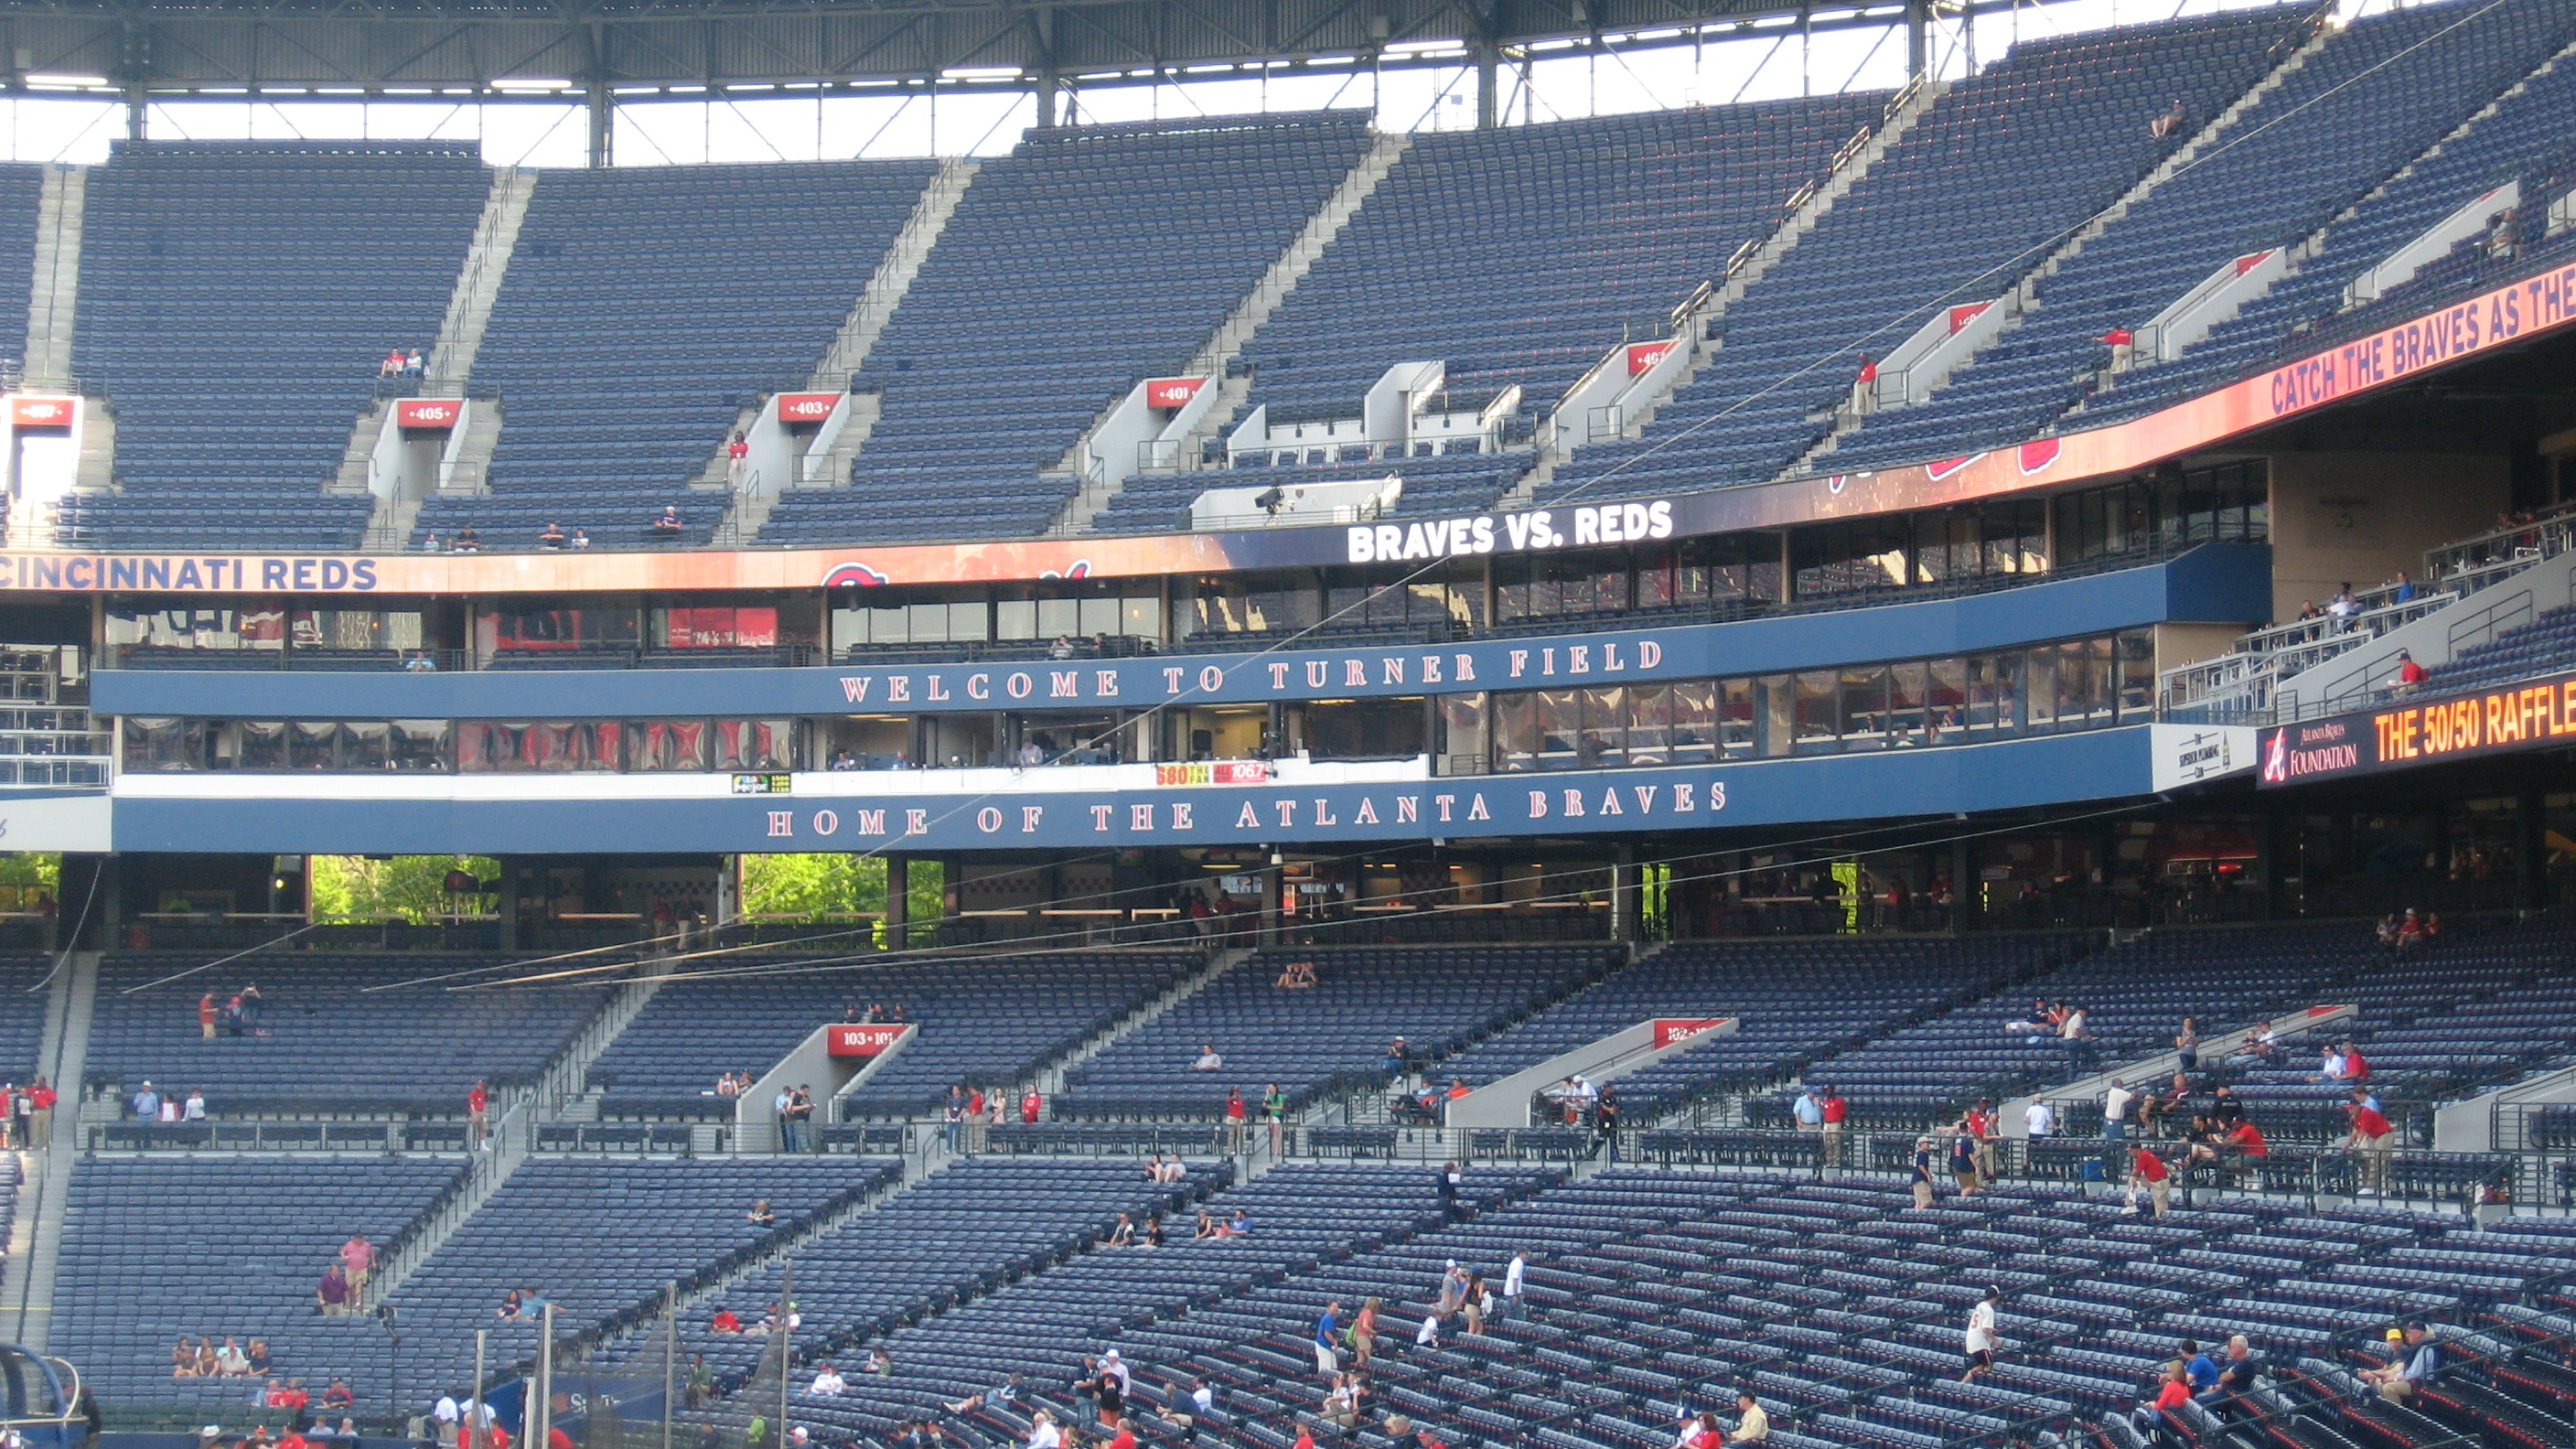 Atlanta Braves Seating Information  Atlanta braves, Braves, Turner field